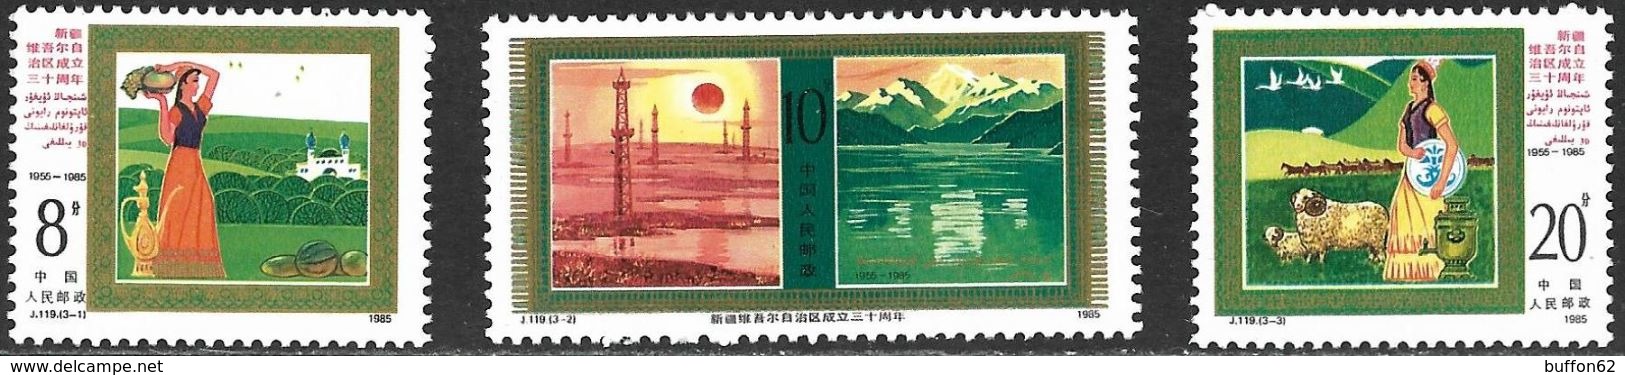 Chine / China (1985) - Champ Pétrolifère / Oil Field. Oasis Pâturage, Moutons. Région Xinjiang Uygur. MNH. - Pétrole